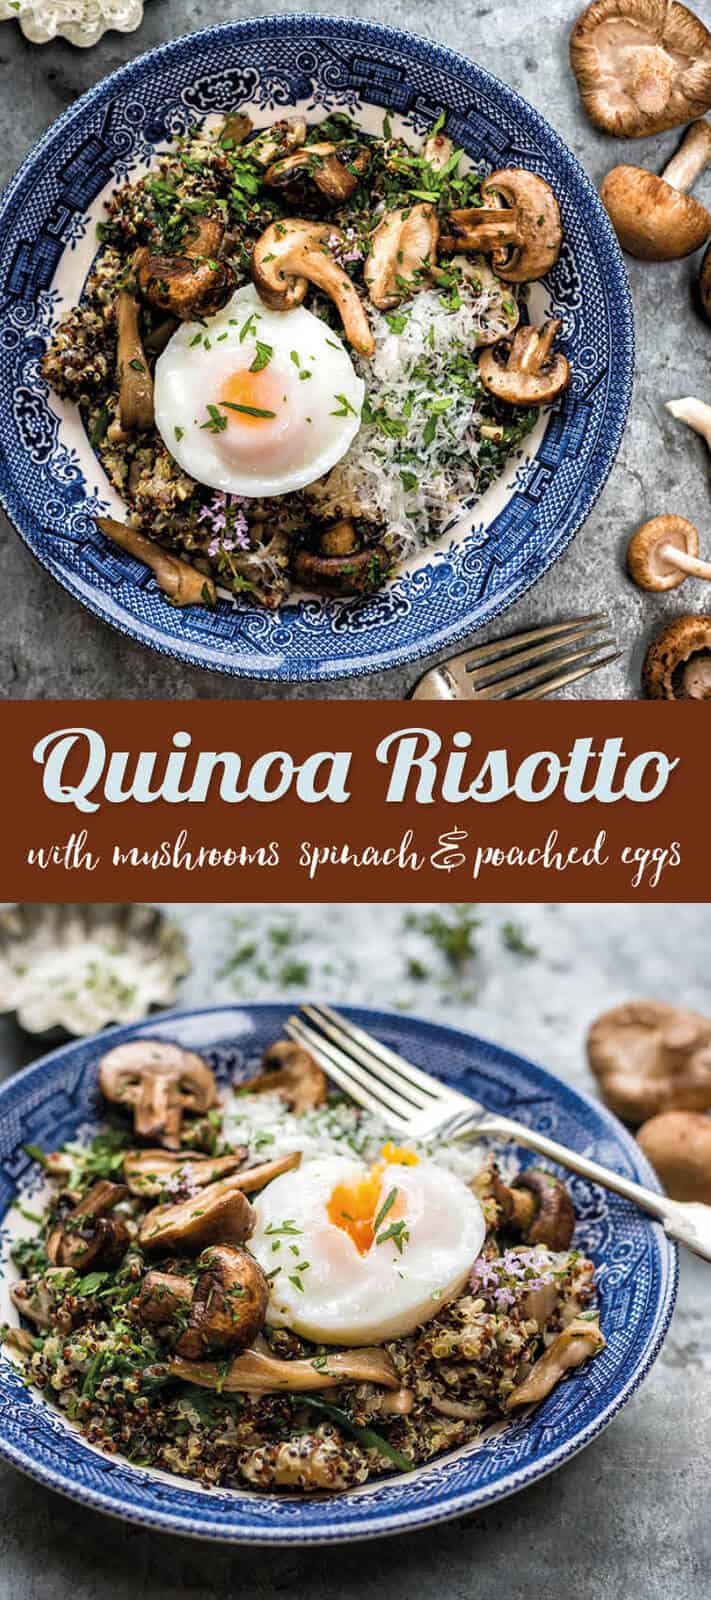 Vegetarian mushroom, spinach and quinoa risotto